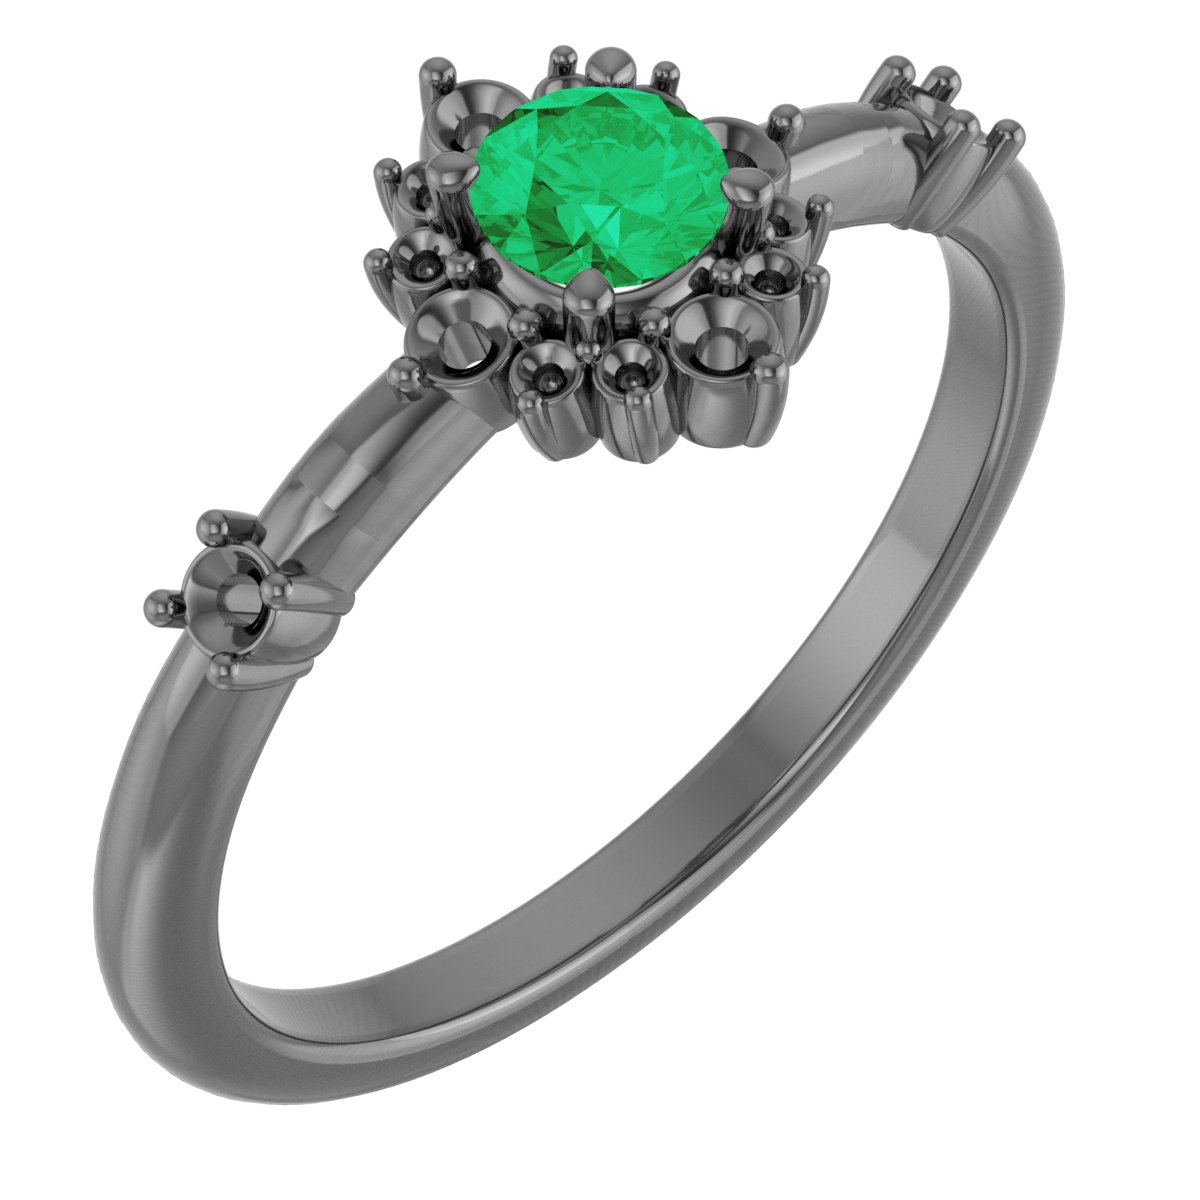 Platinum Chatham Created Emerald and .167 CTW Diamond Ring Ref. 15641463